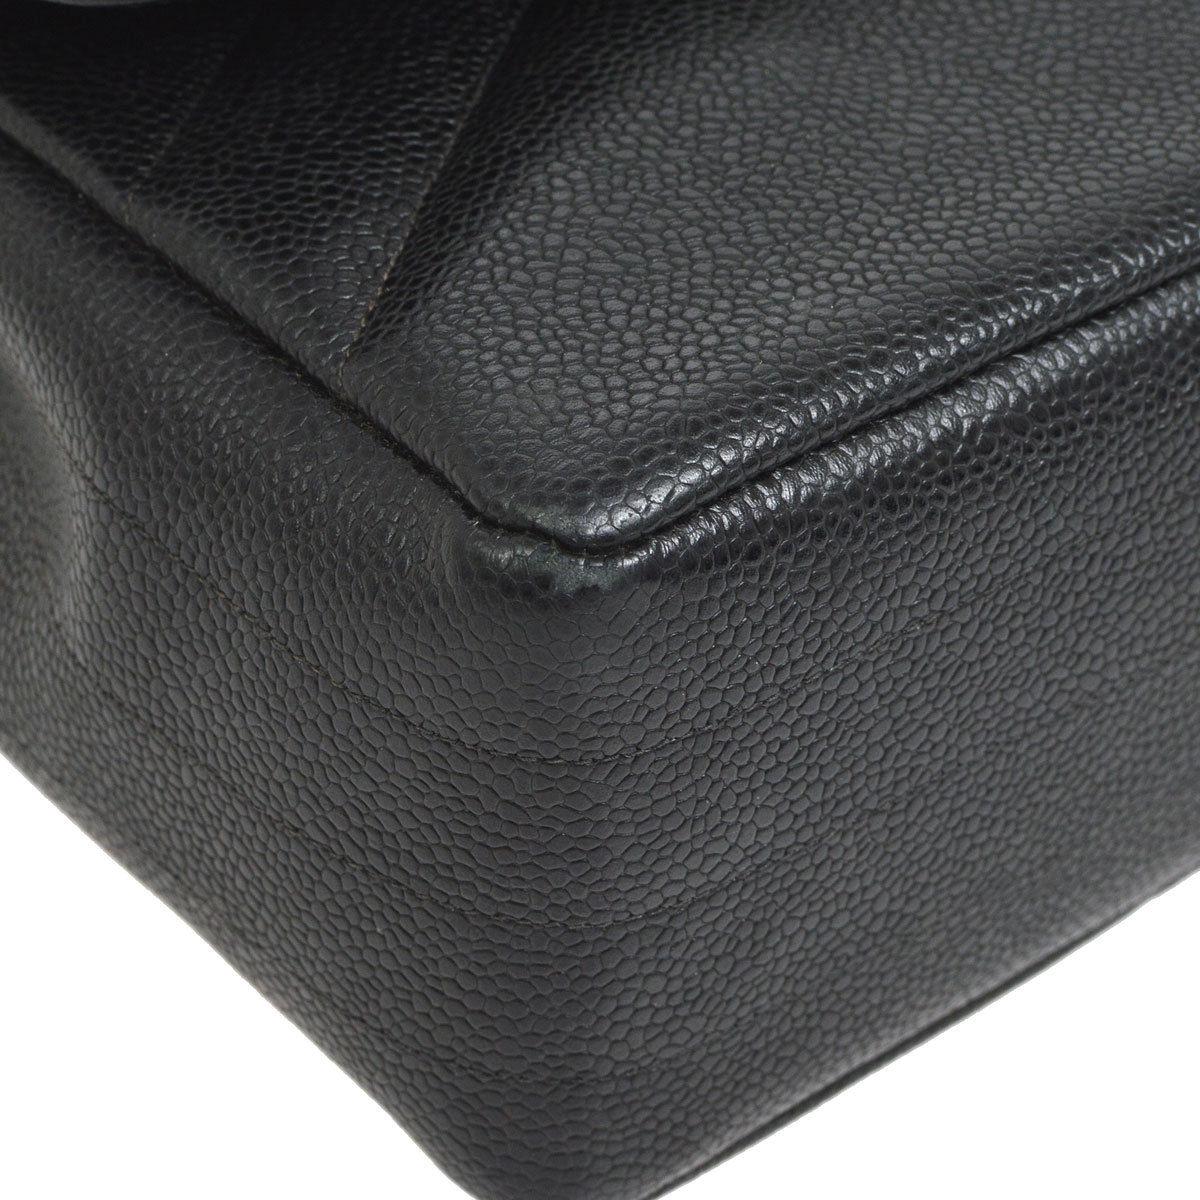 Chanel Rare Large Black Leather CC Logo Evening Flap Shoulder Bag in Box 1